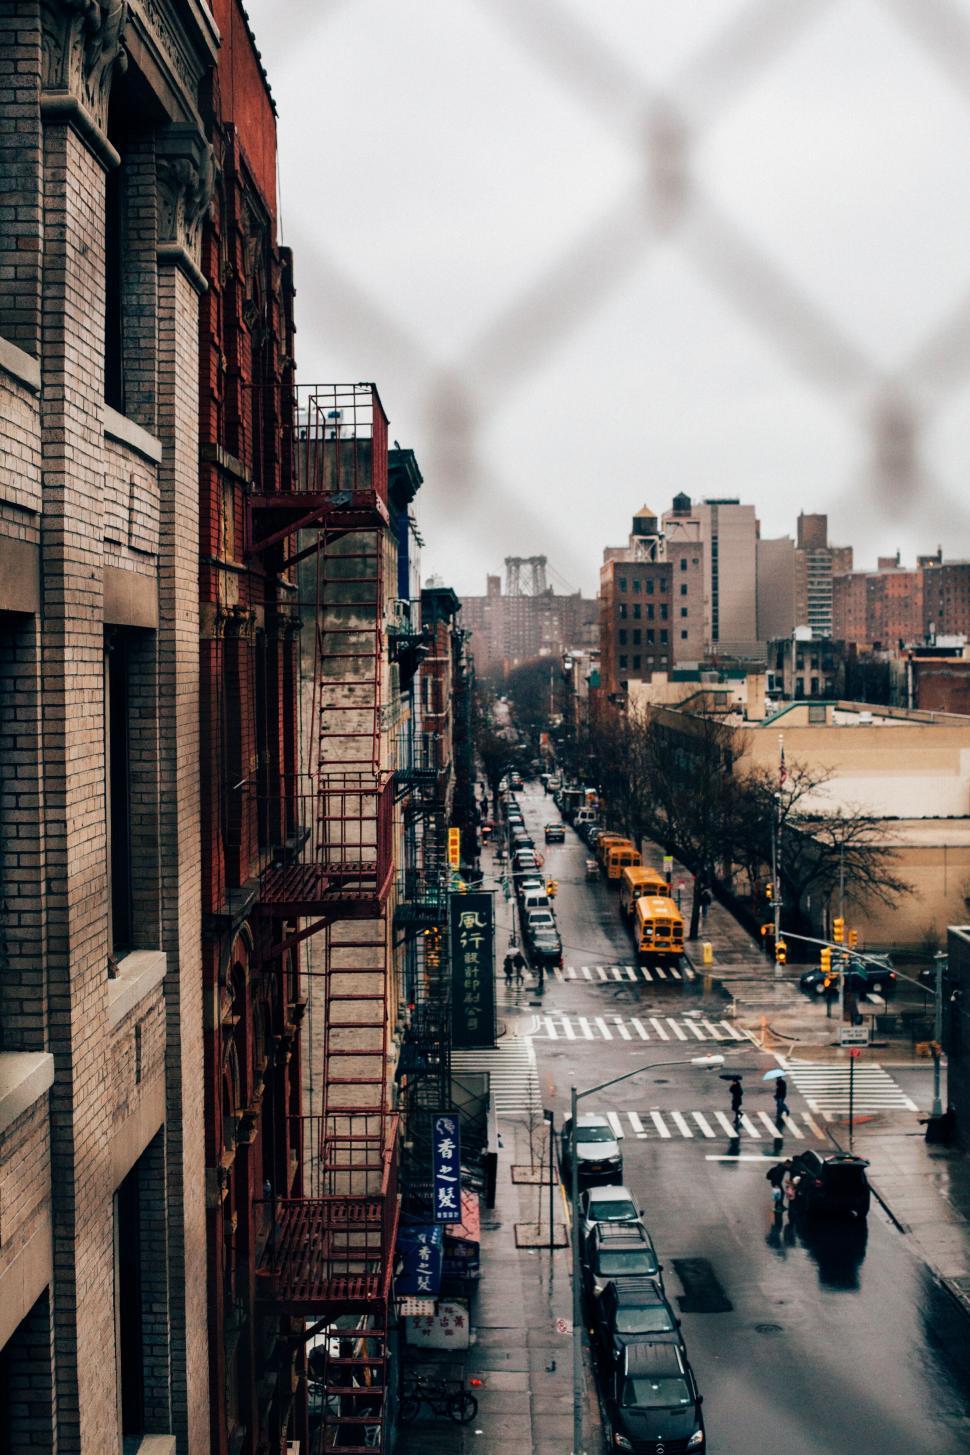 Free Image of Urban street view through a fence blur 